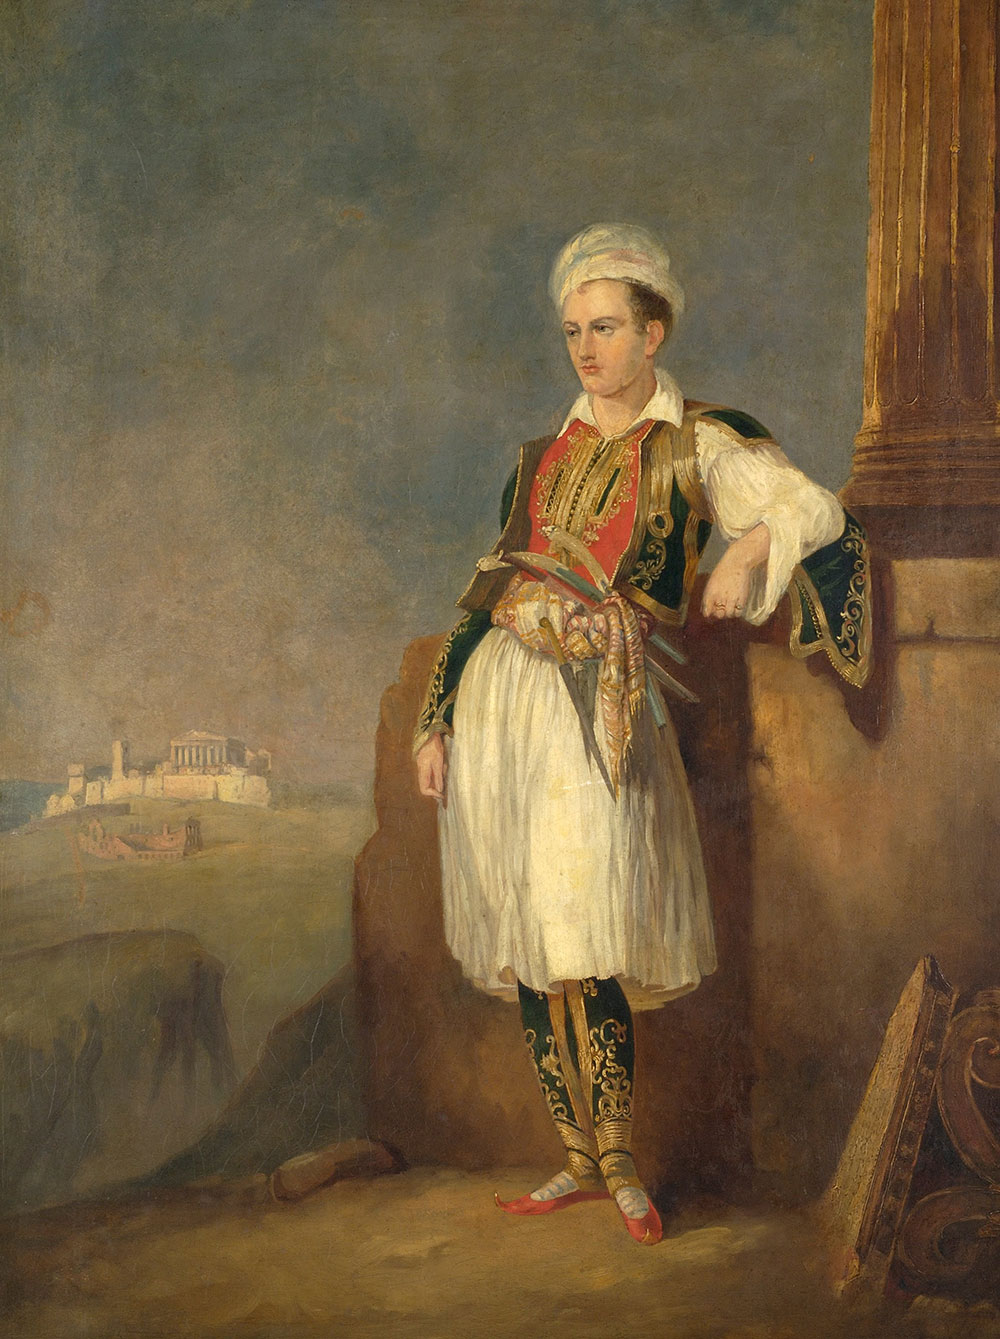 Portrait of Lord Byron in Greek costume, 1830, unknown artist. 